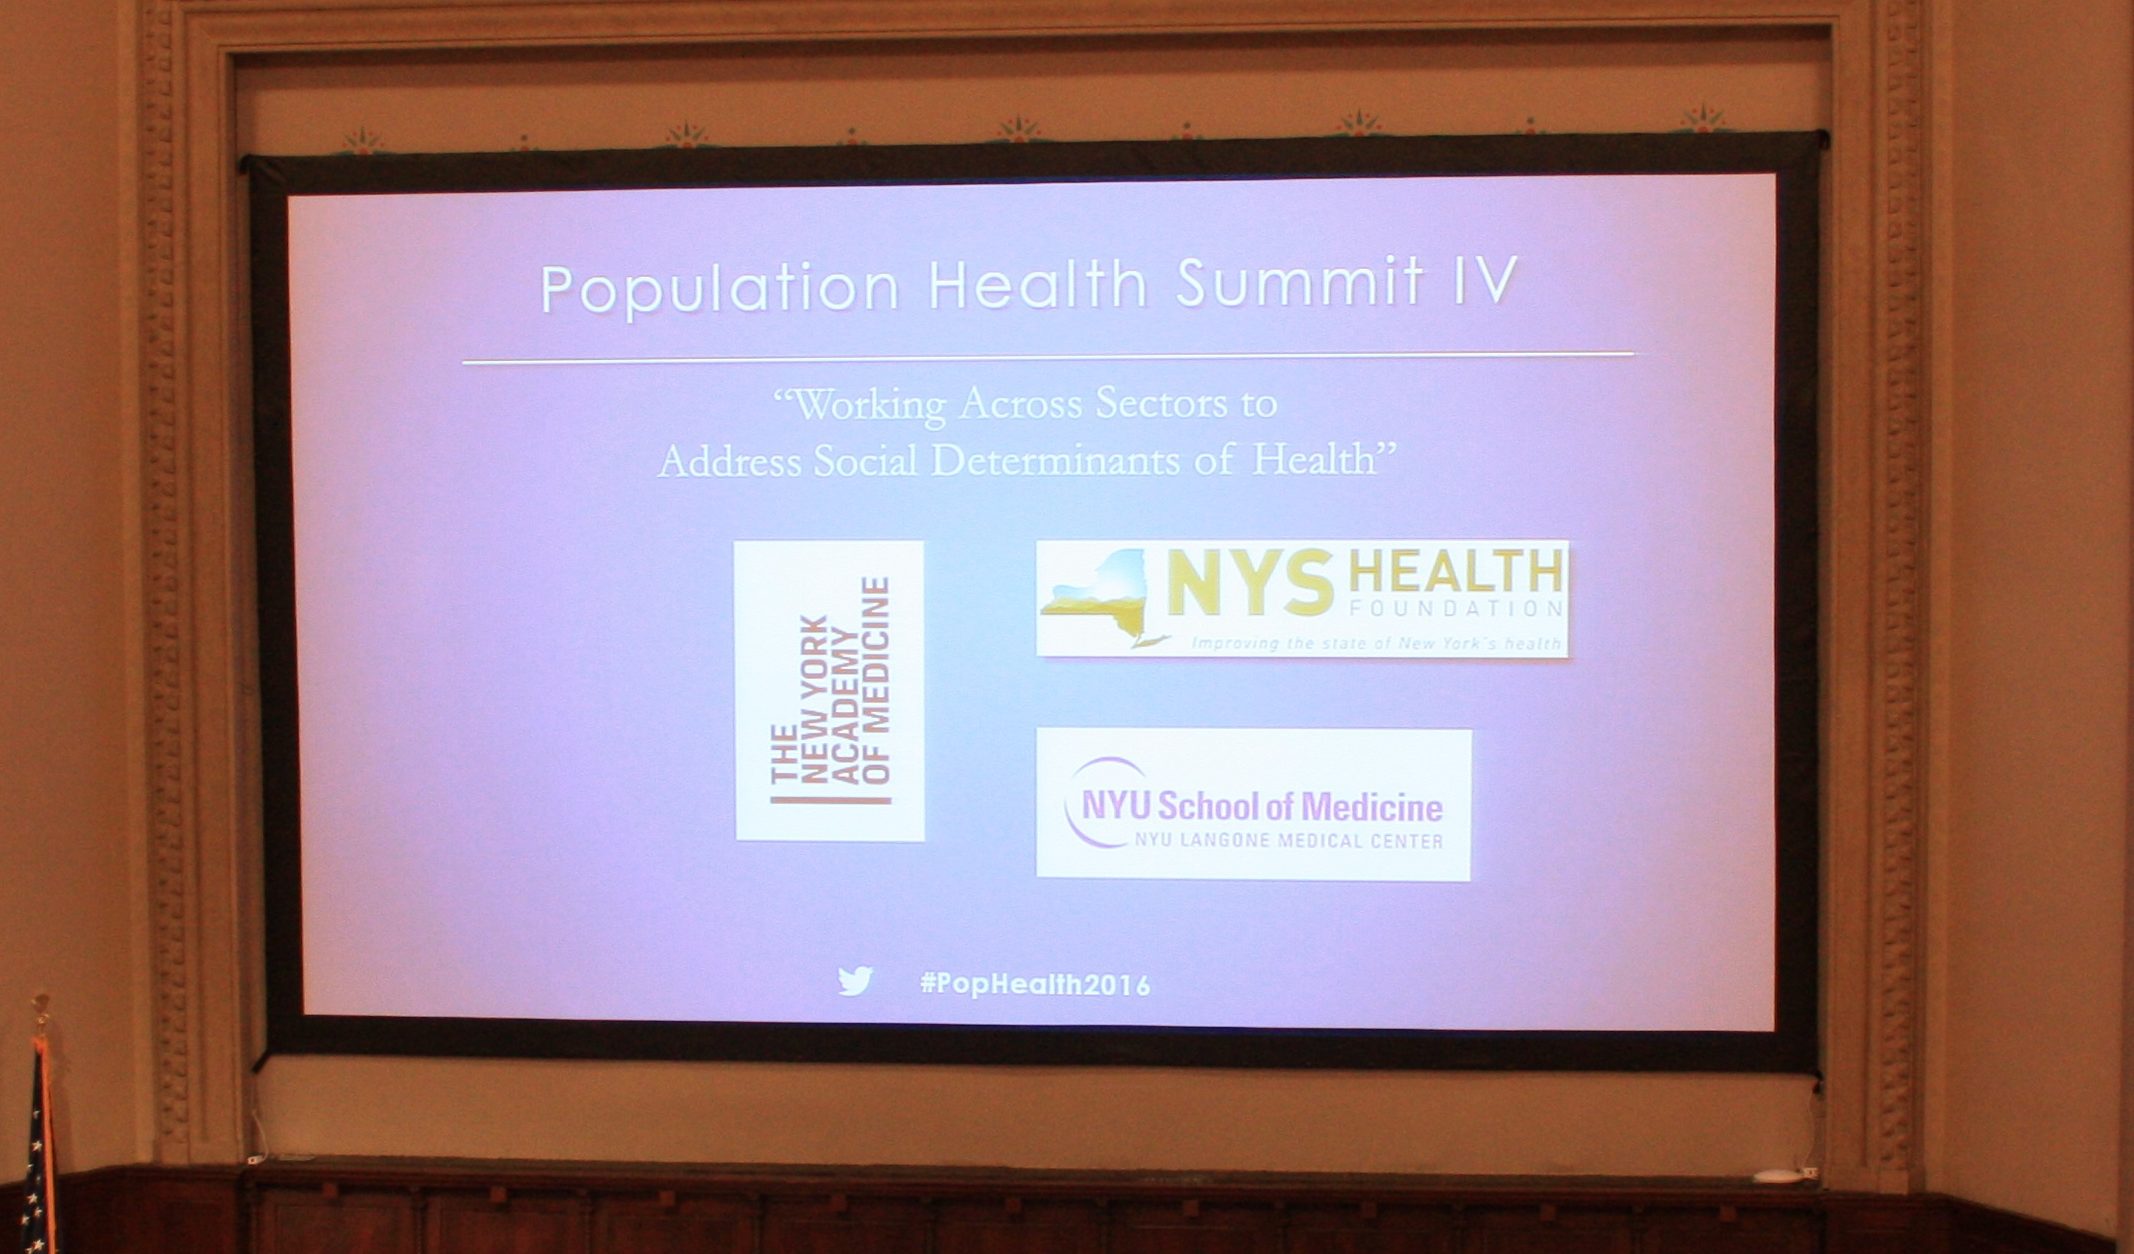 Population Health Summit IV cover slide.